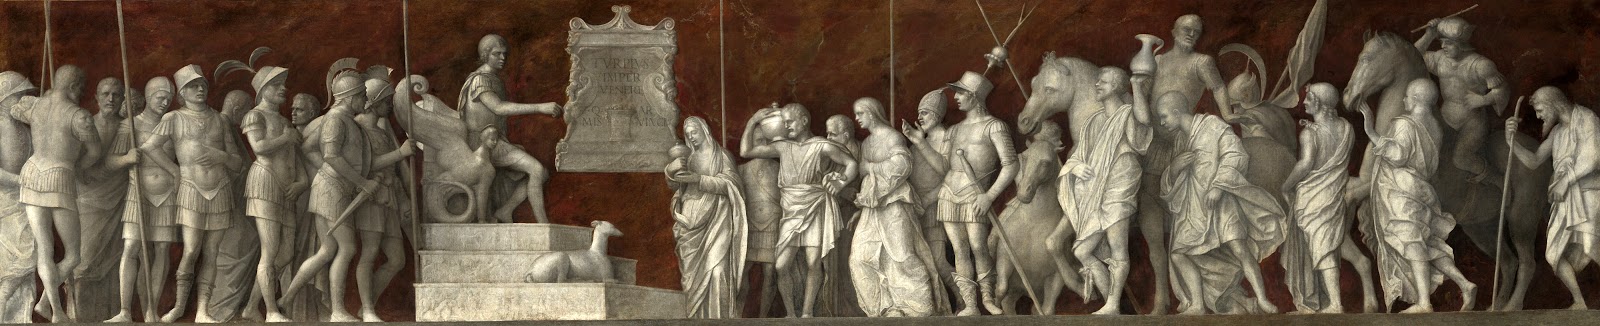 Giovanni+Bellini-1436-1516 (25).jpg